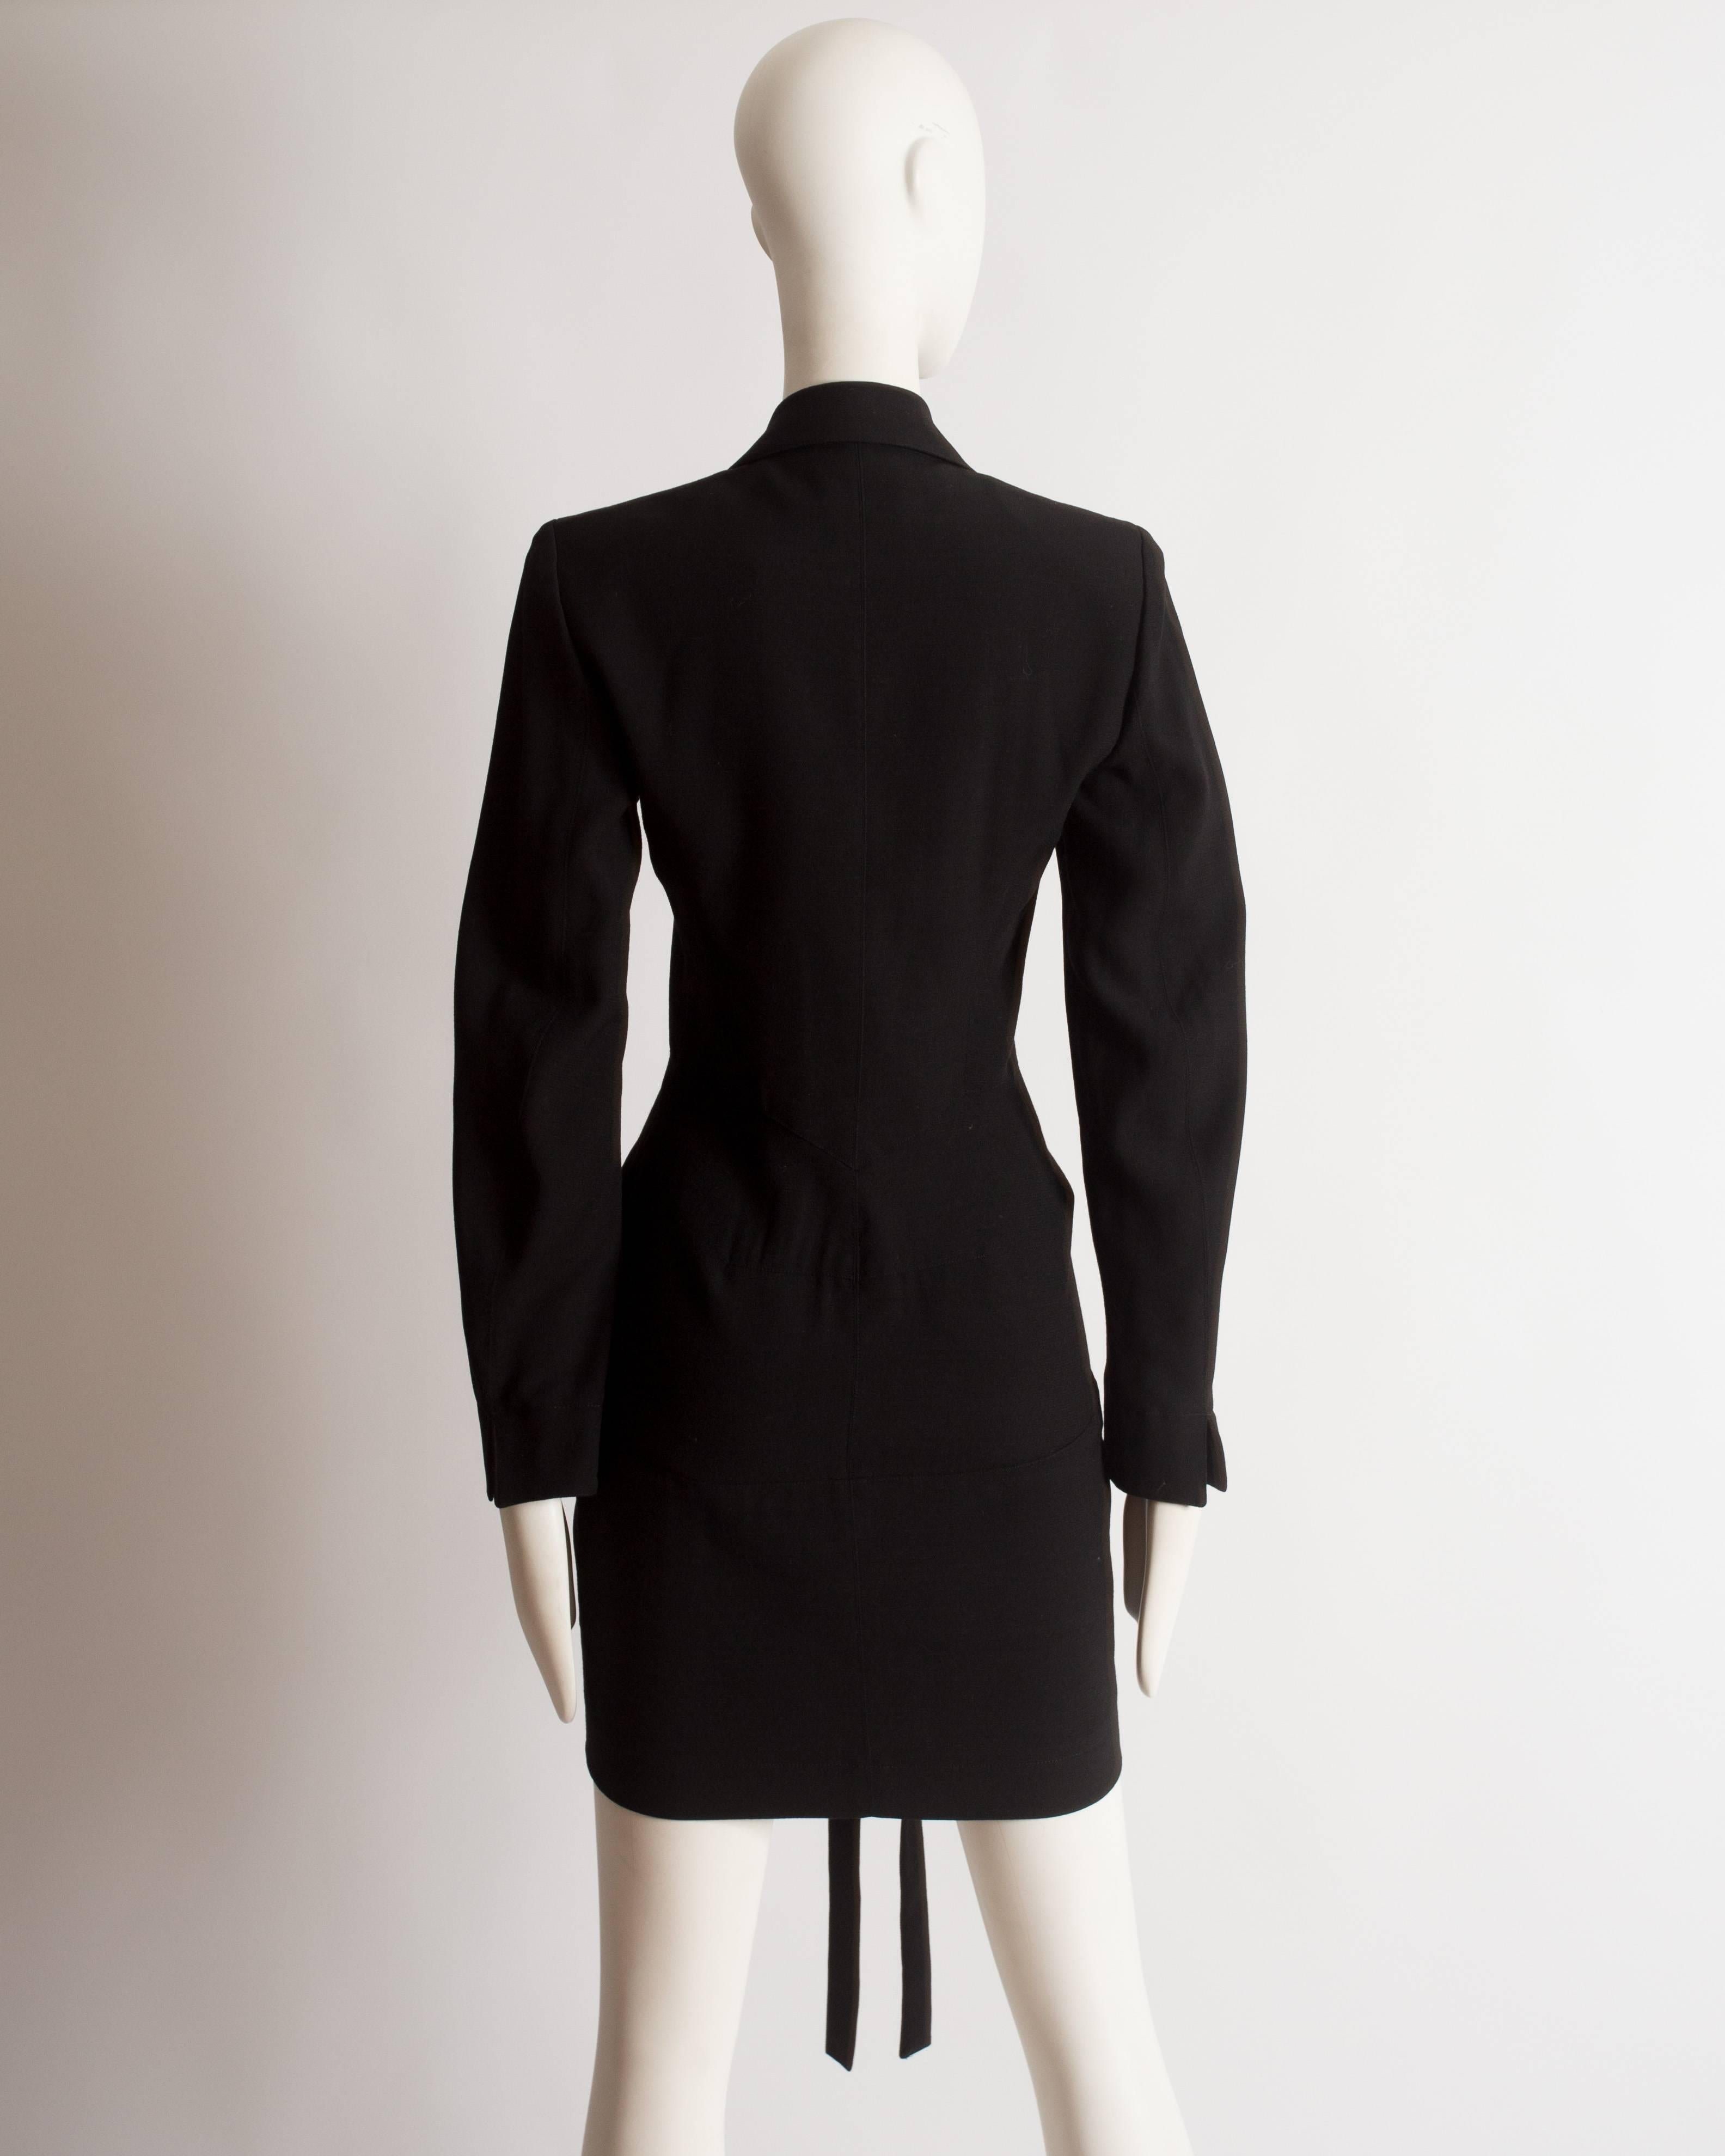 Alaia black wool mini dress, AW 1988 3